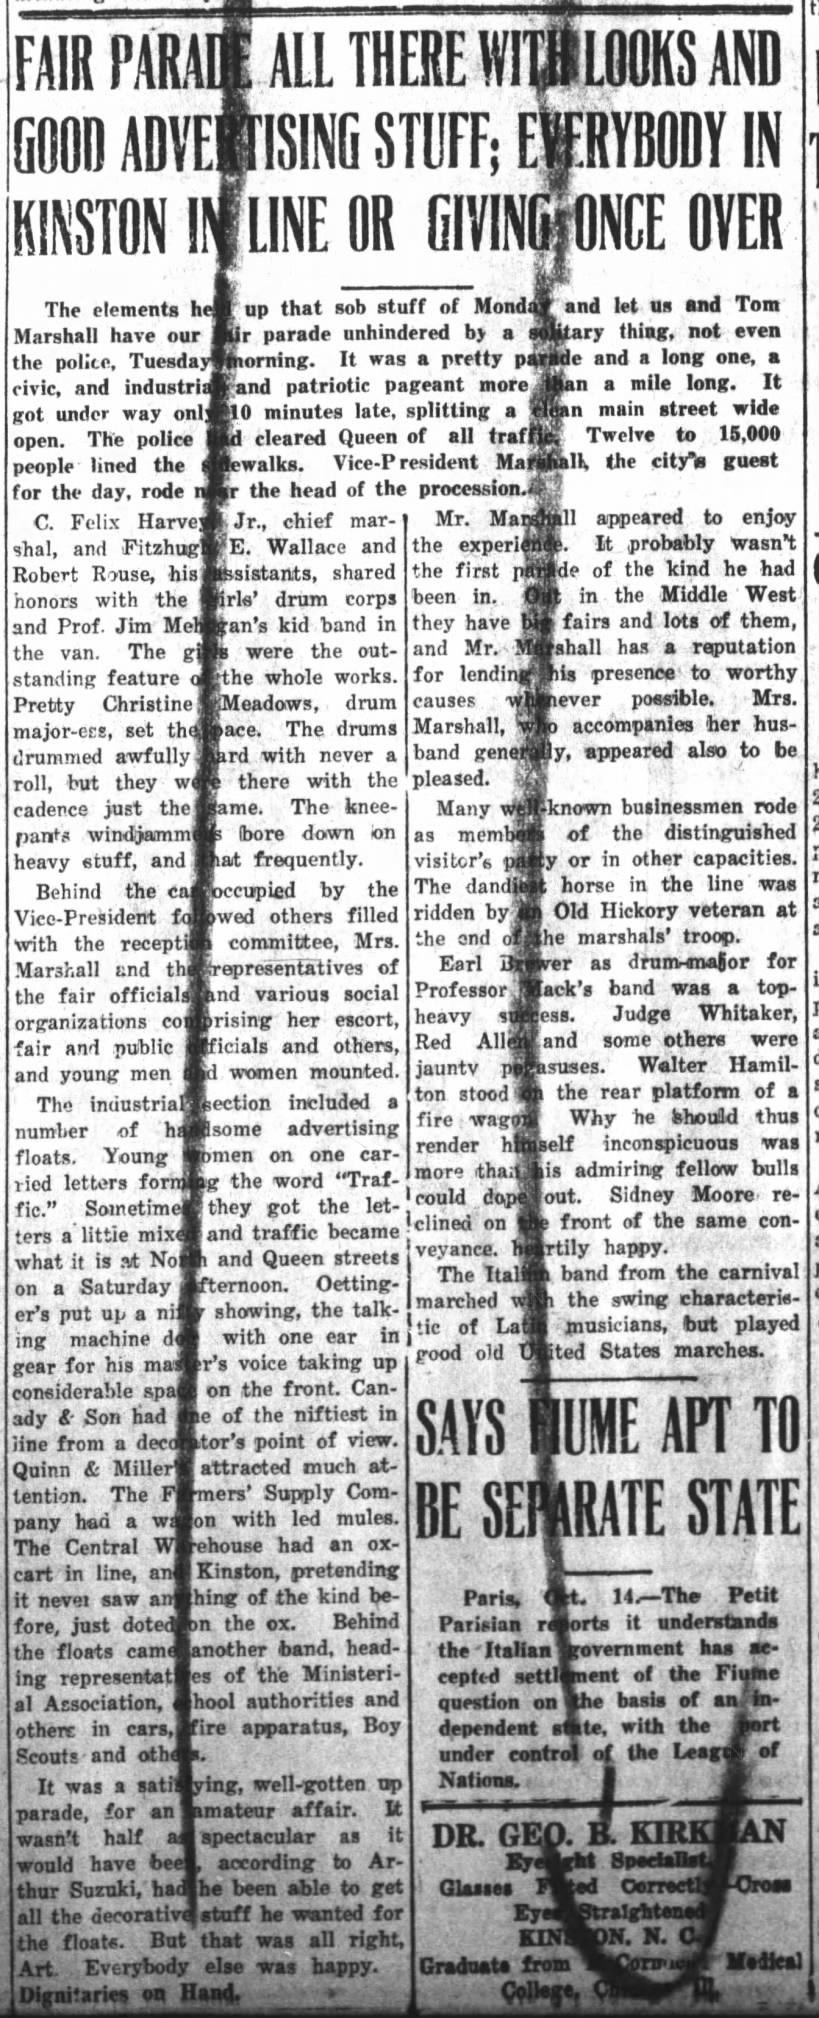 The Kinston Free Press (Kinston, NC)  Sat., 18 October 1919  Earl Brewer, Fair Parade